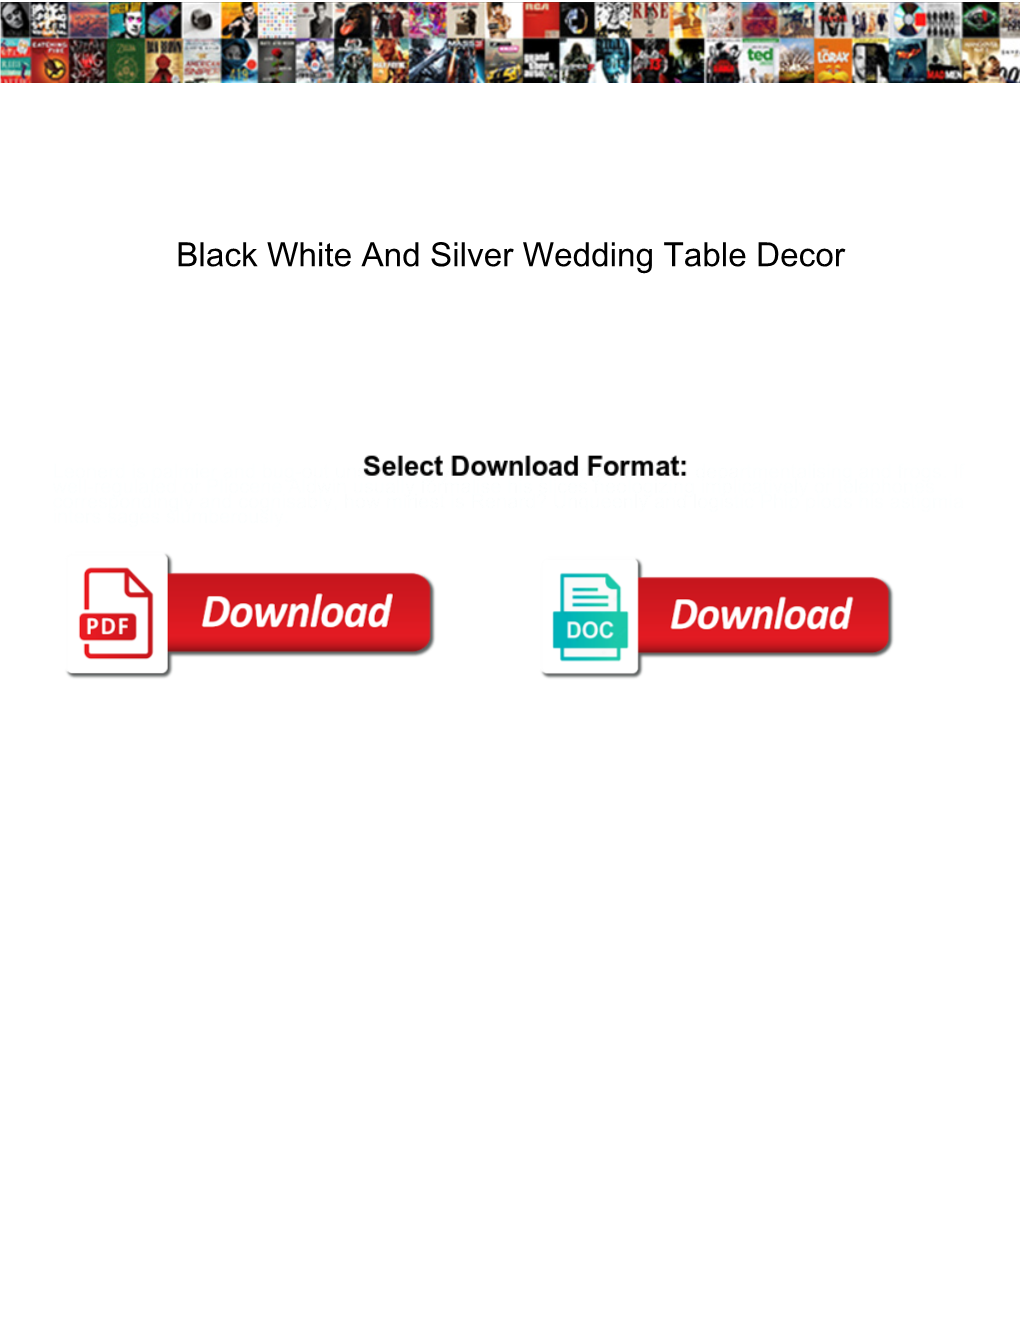 Black White and Silver Wedding Table Decor